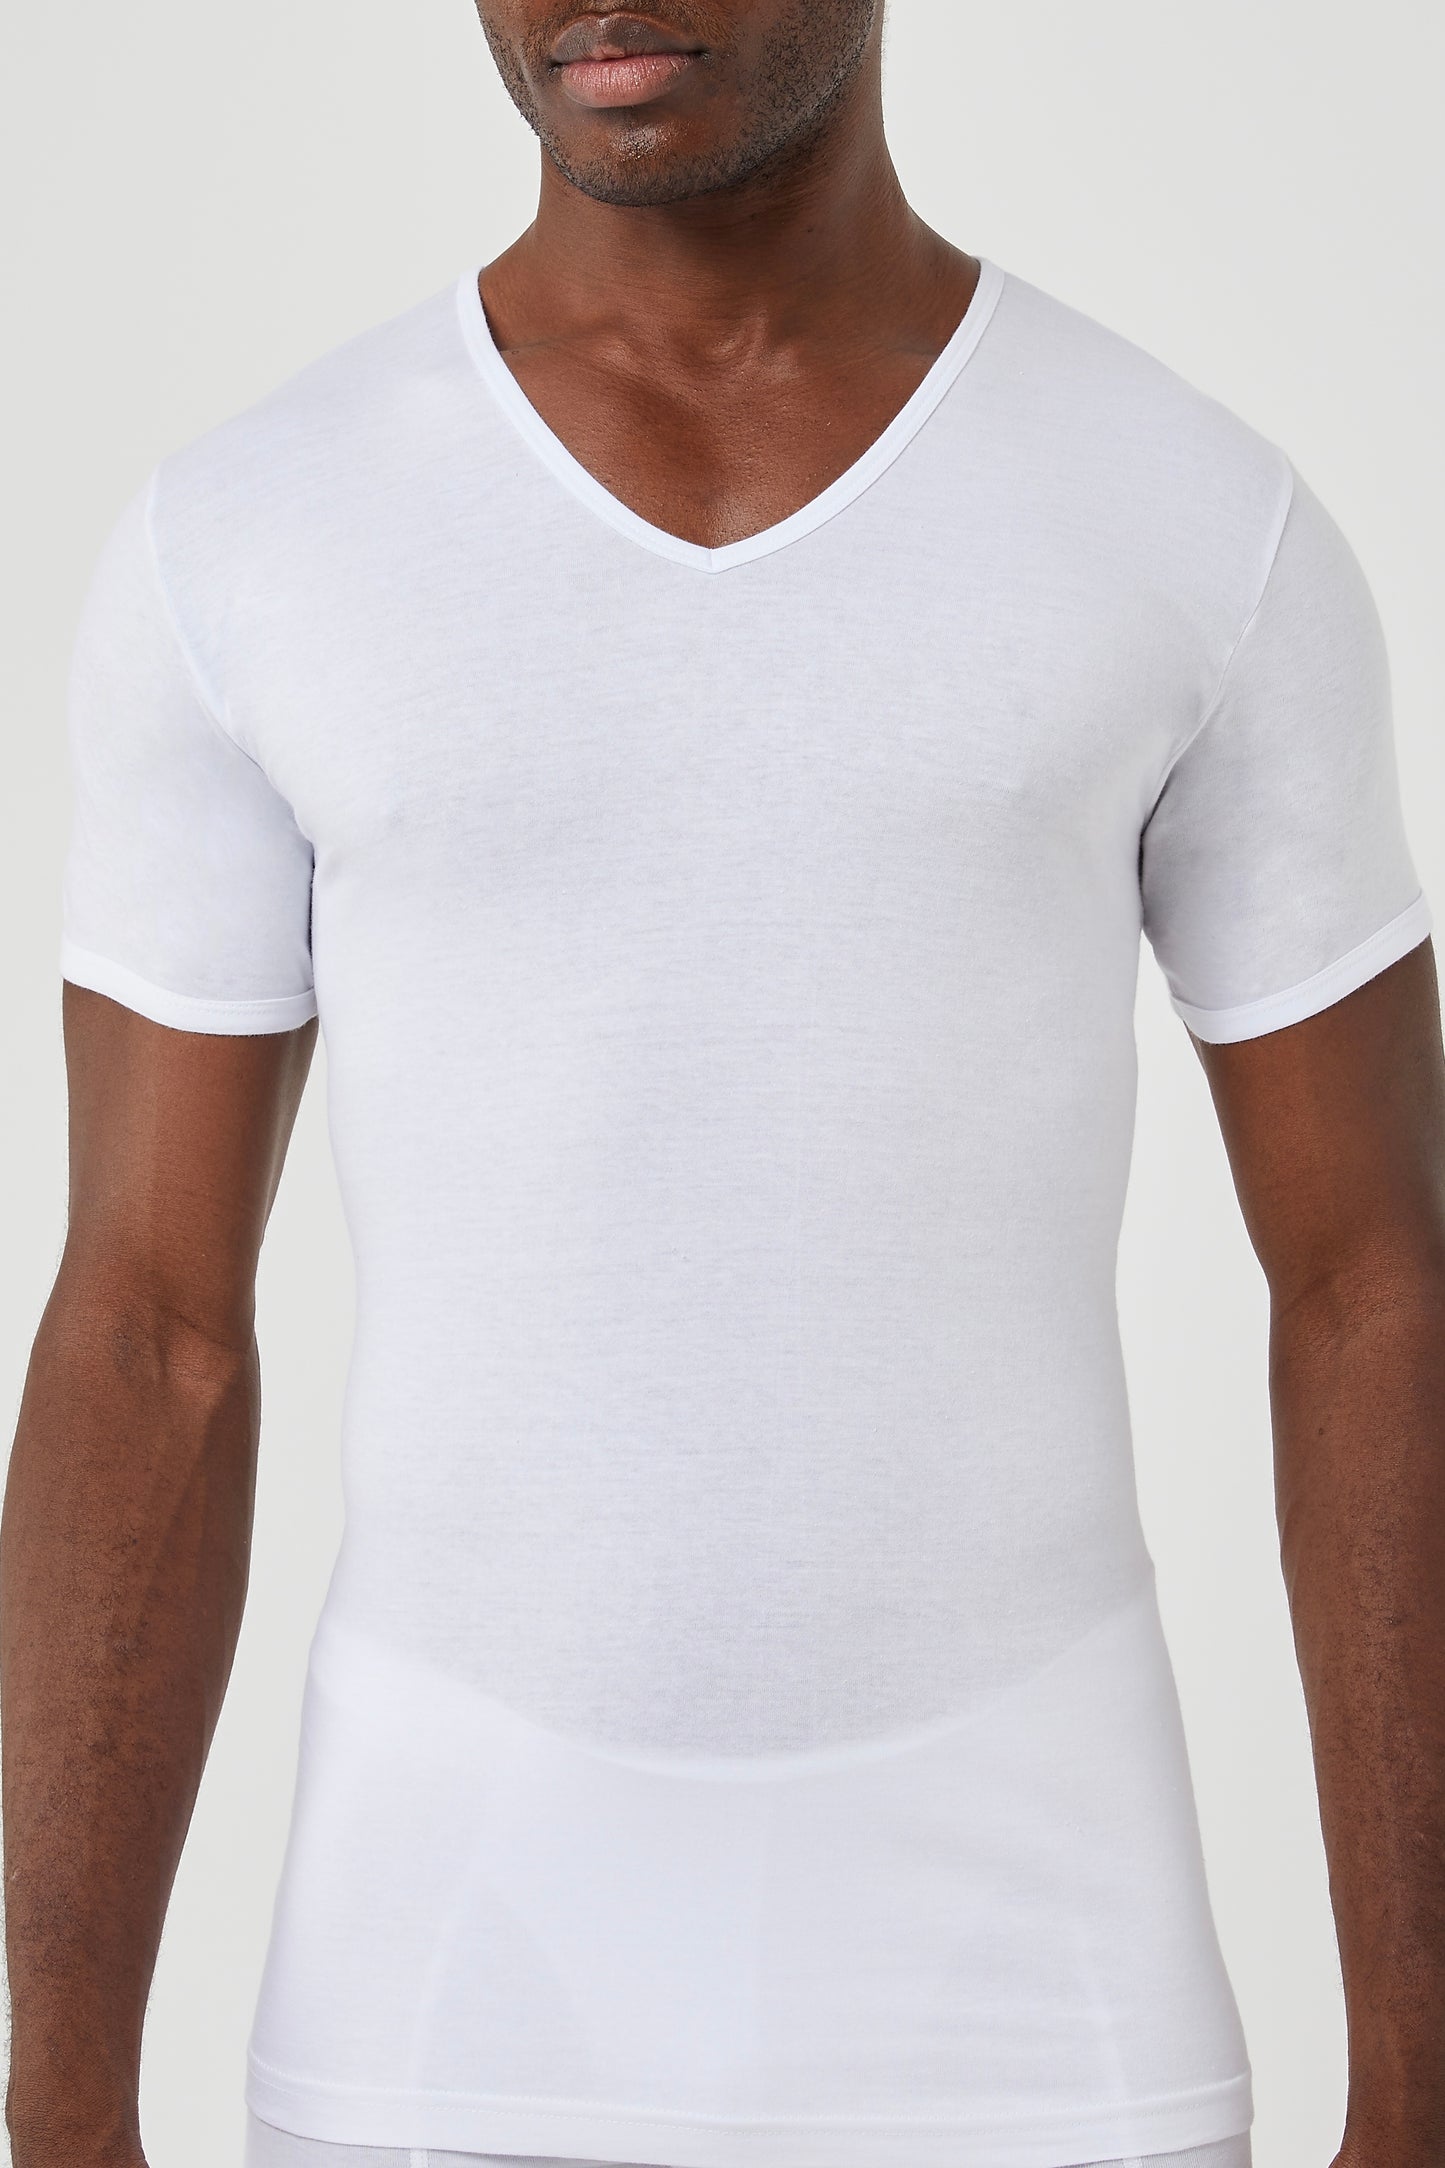 White Cotton V-Neck Men's Undershirt